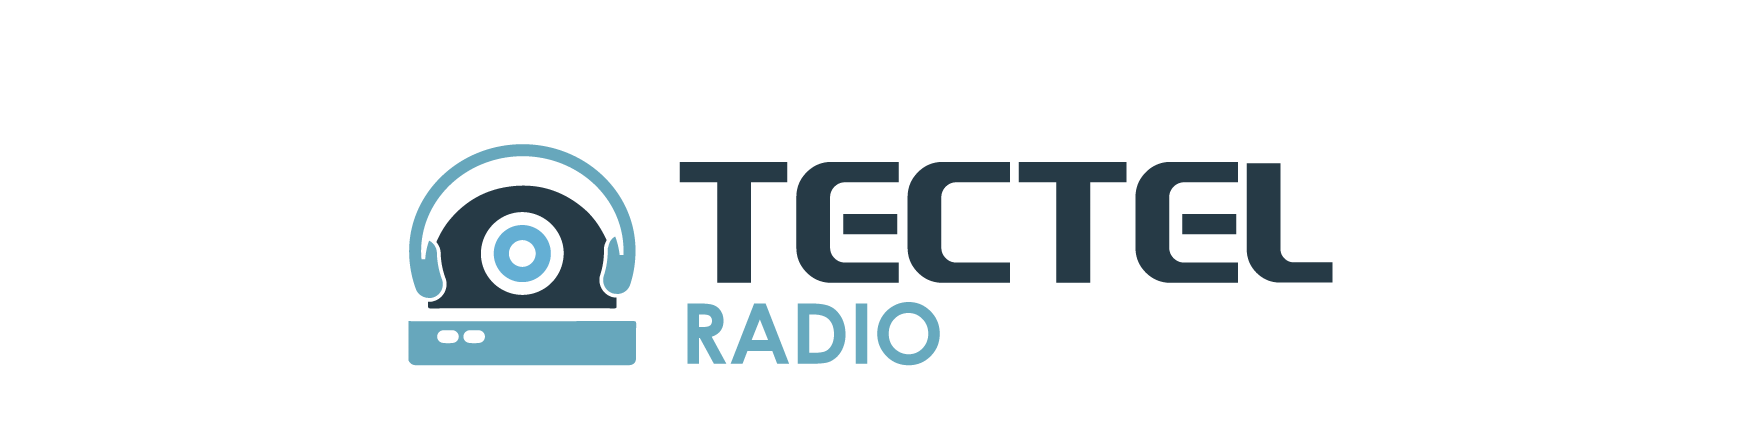 Tectel Radio